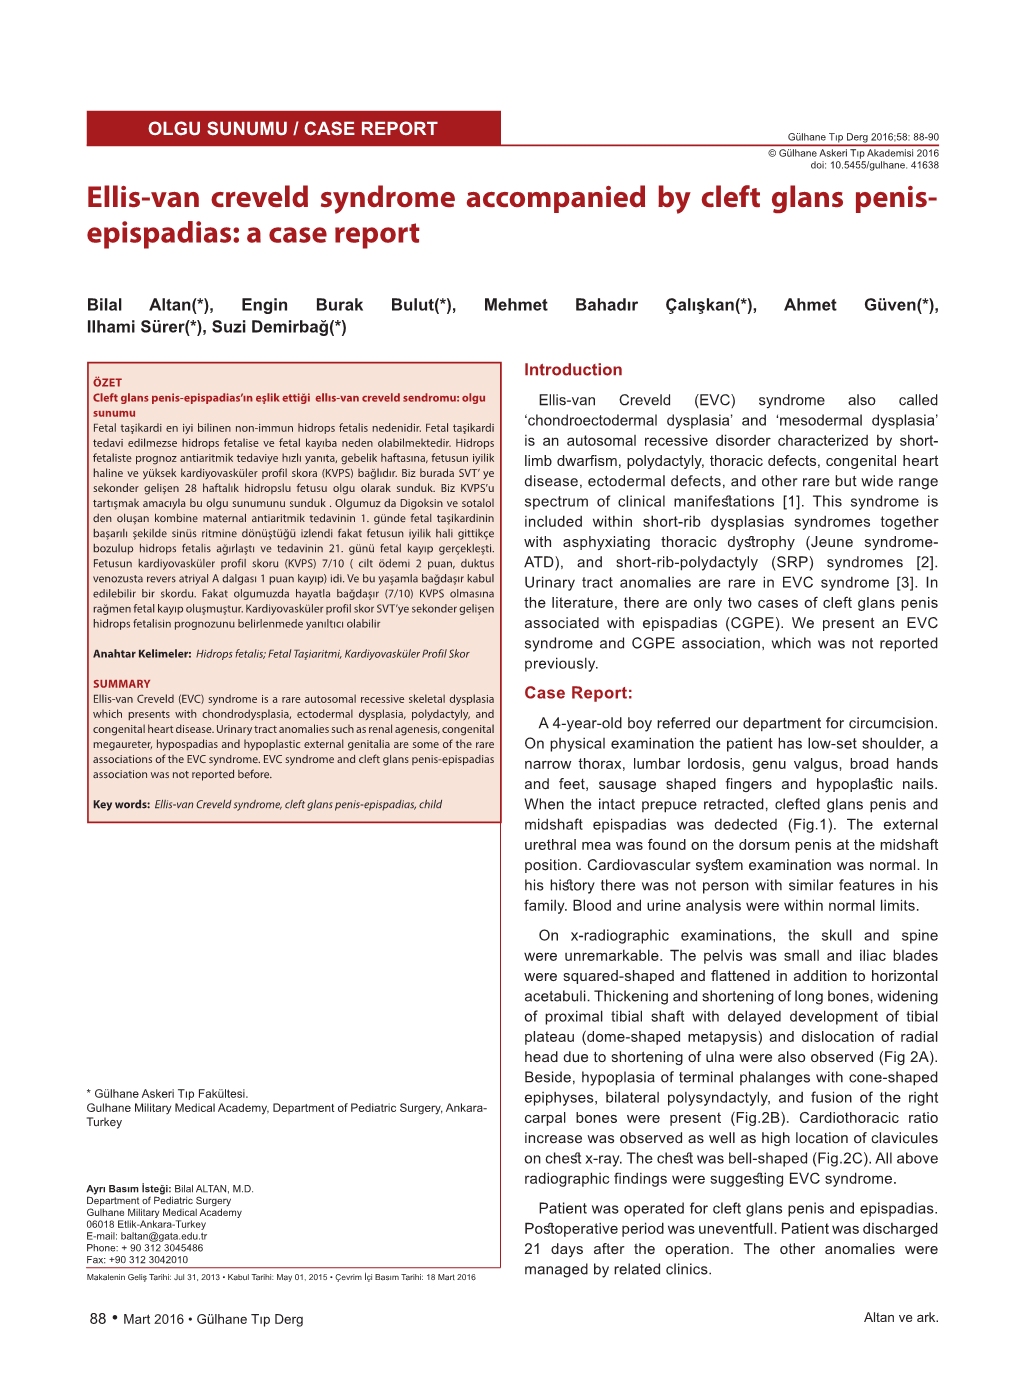 Ellis-Van Creveld Syndrome Accompanied by Cleft Glans Penis- Epispadias: a Case Report